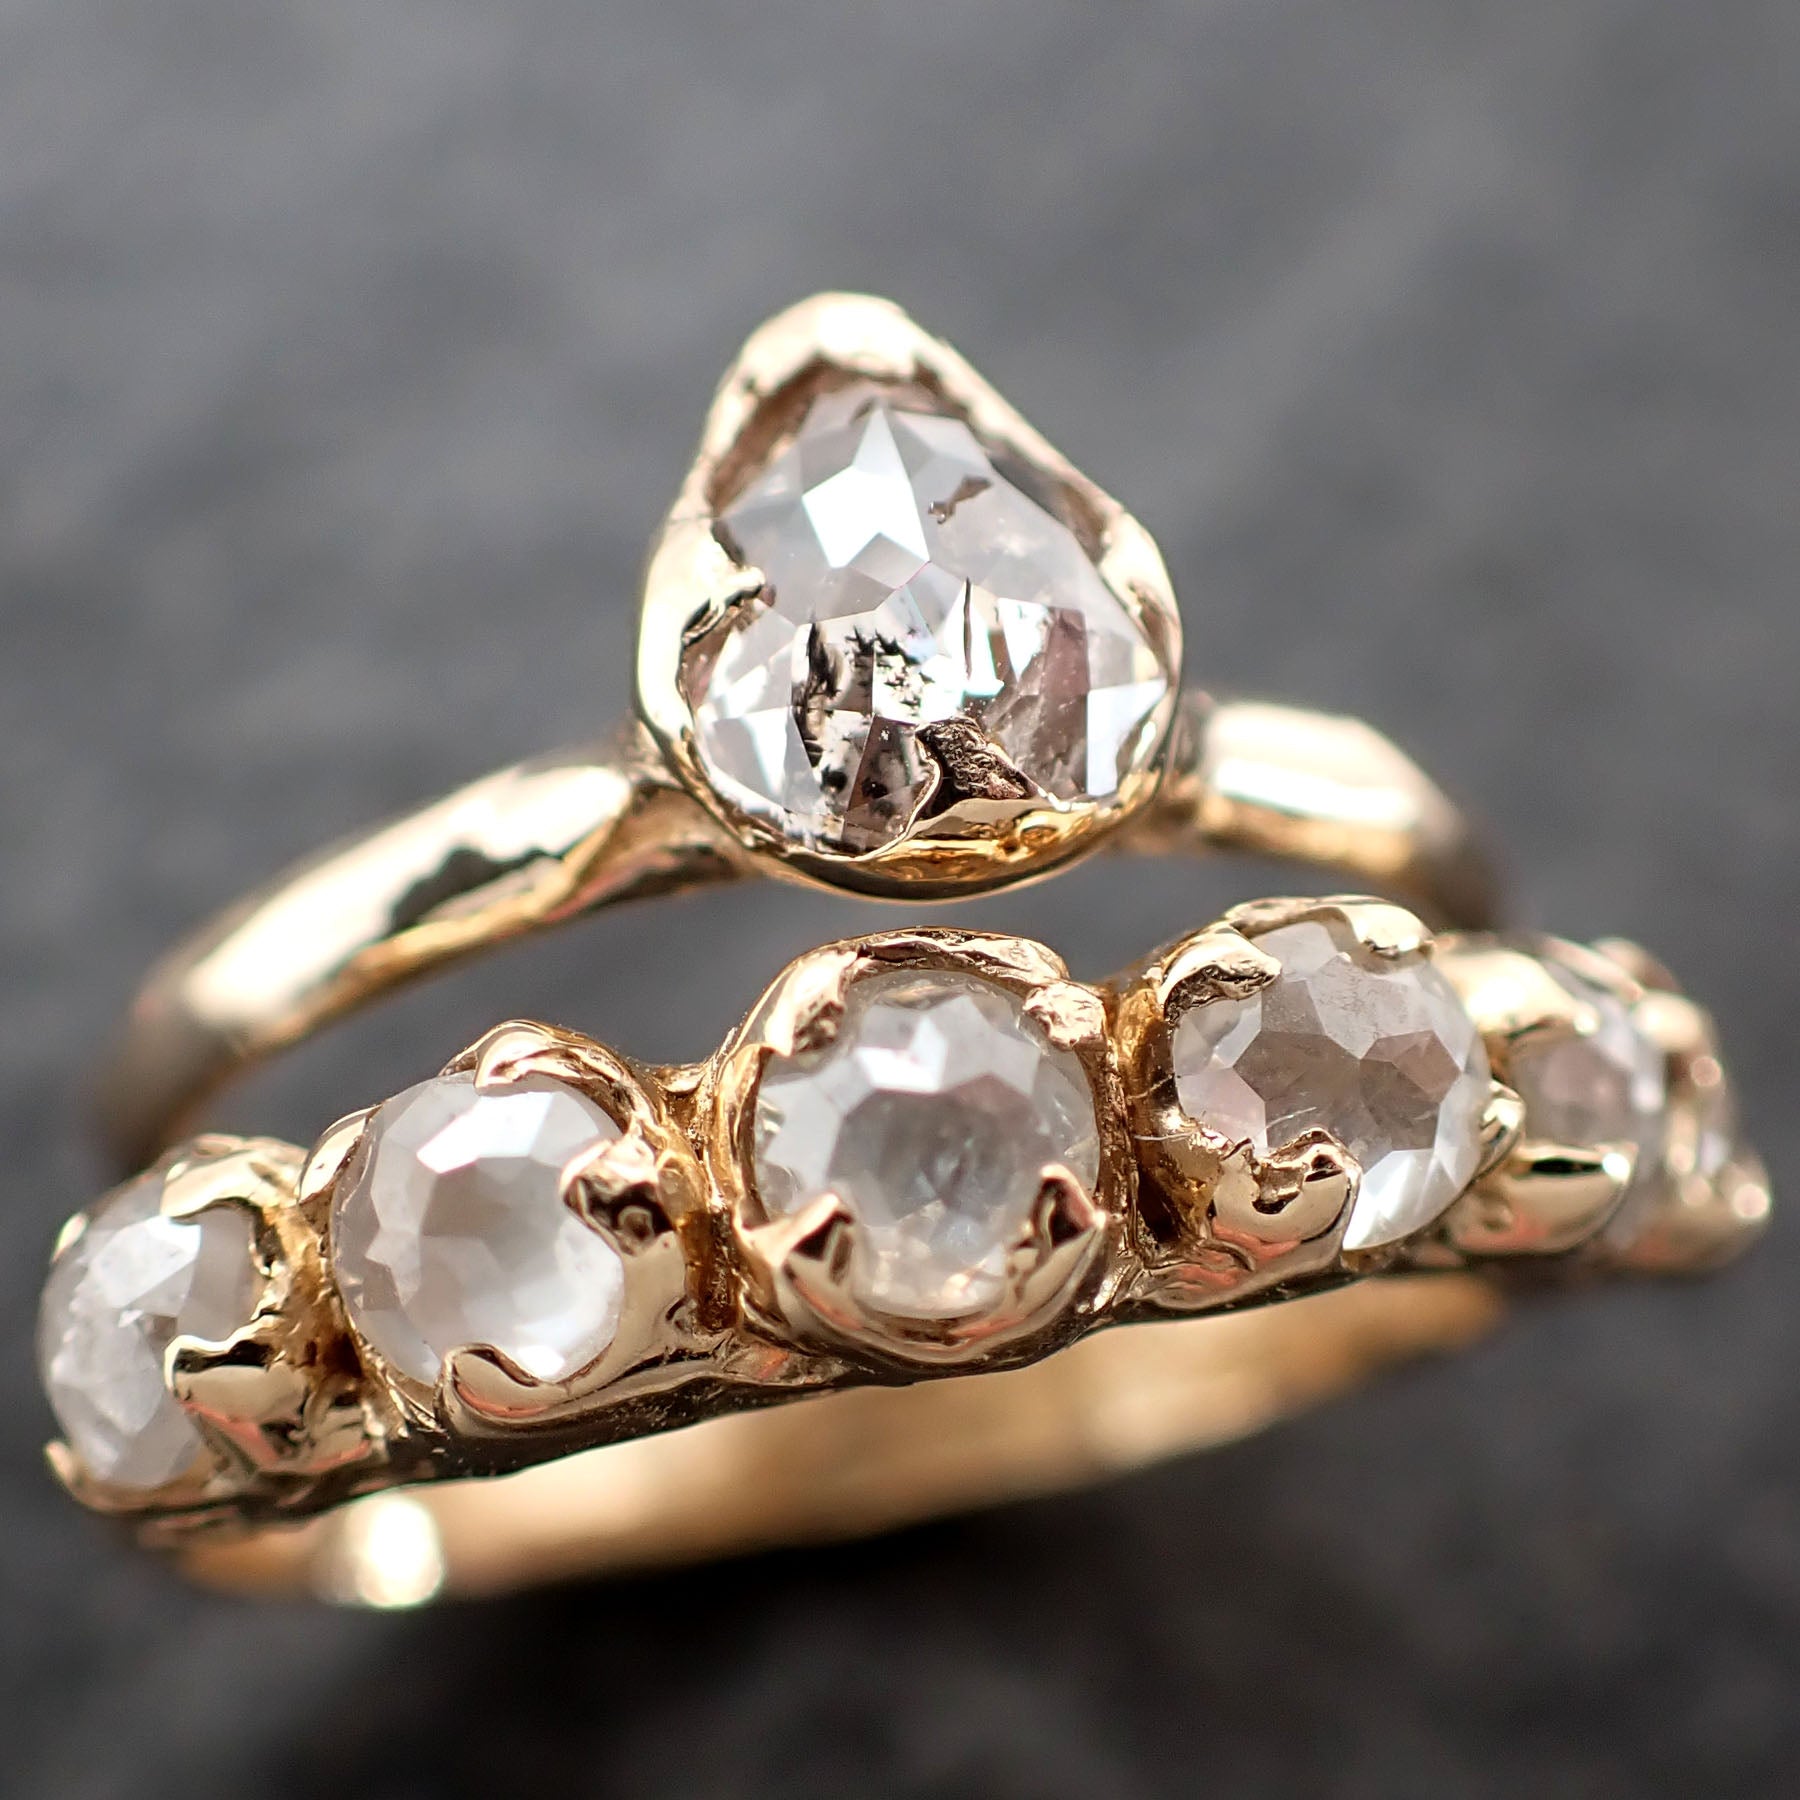 Fancy cut white Diamond Solitaire Engagement 14k yellow Gold Wedding Ring byAngeline 2602